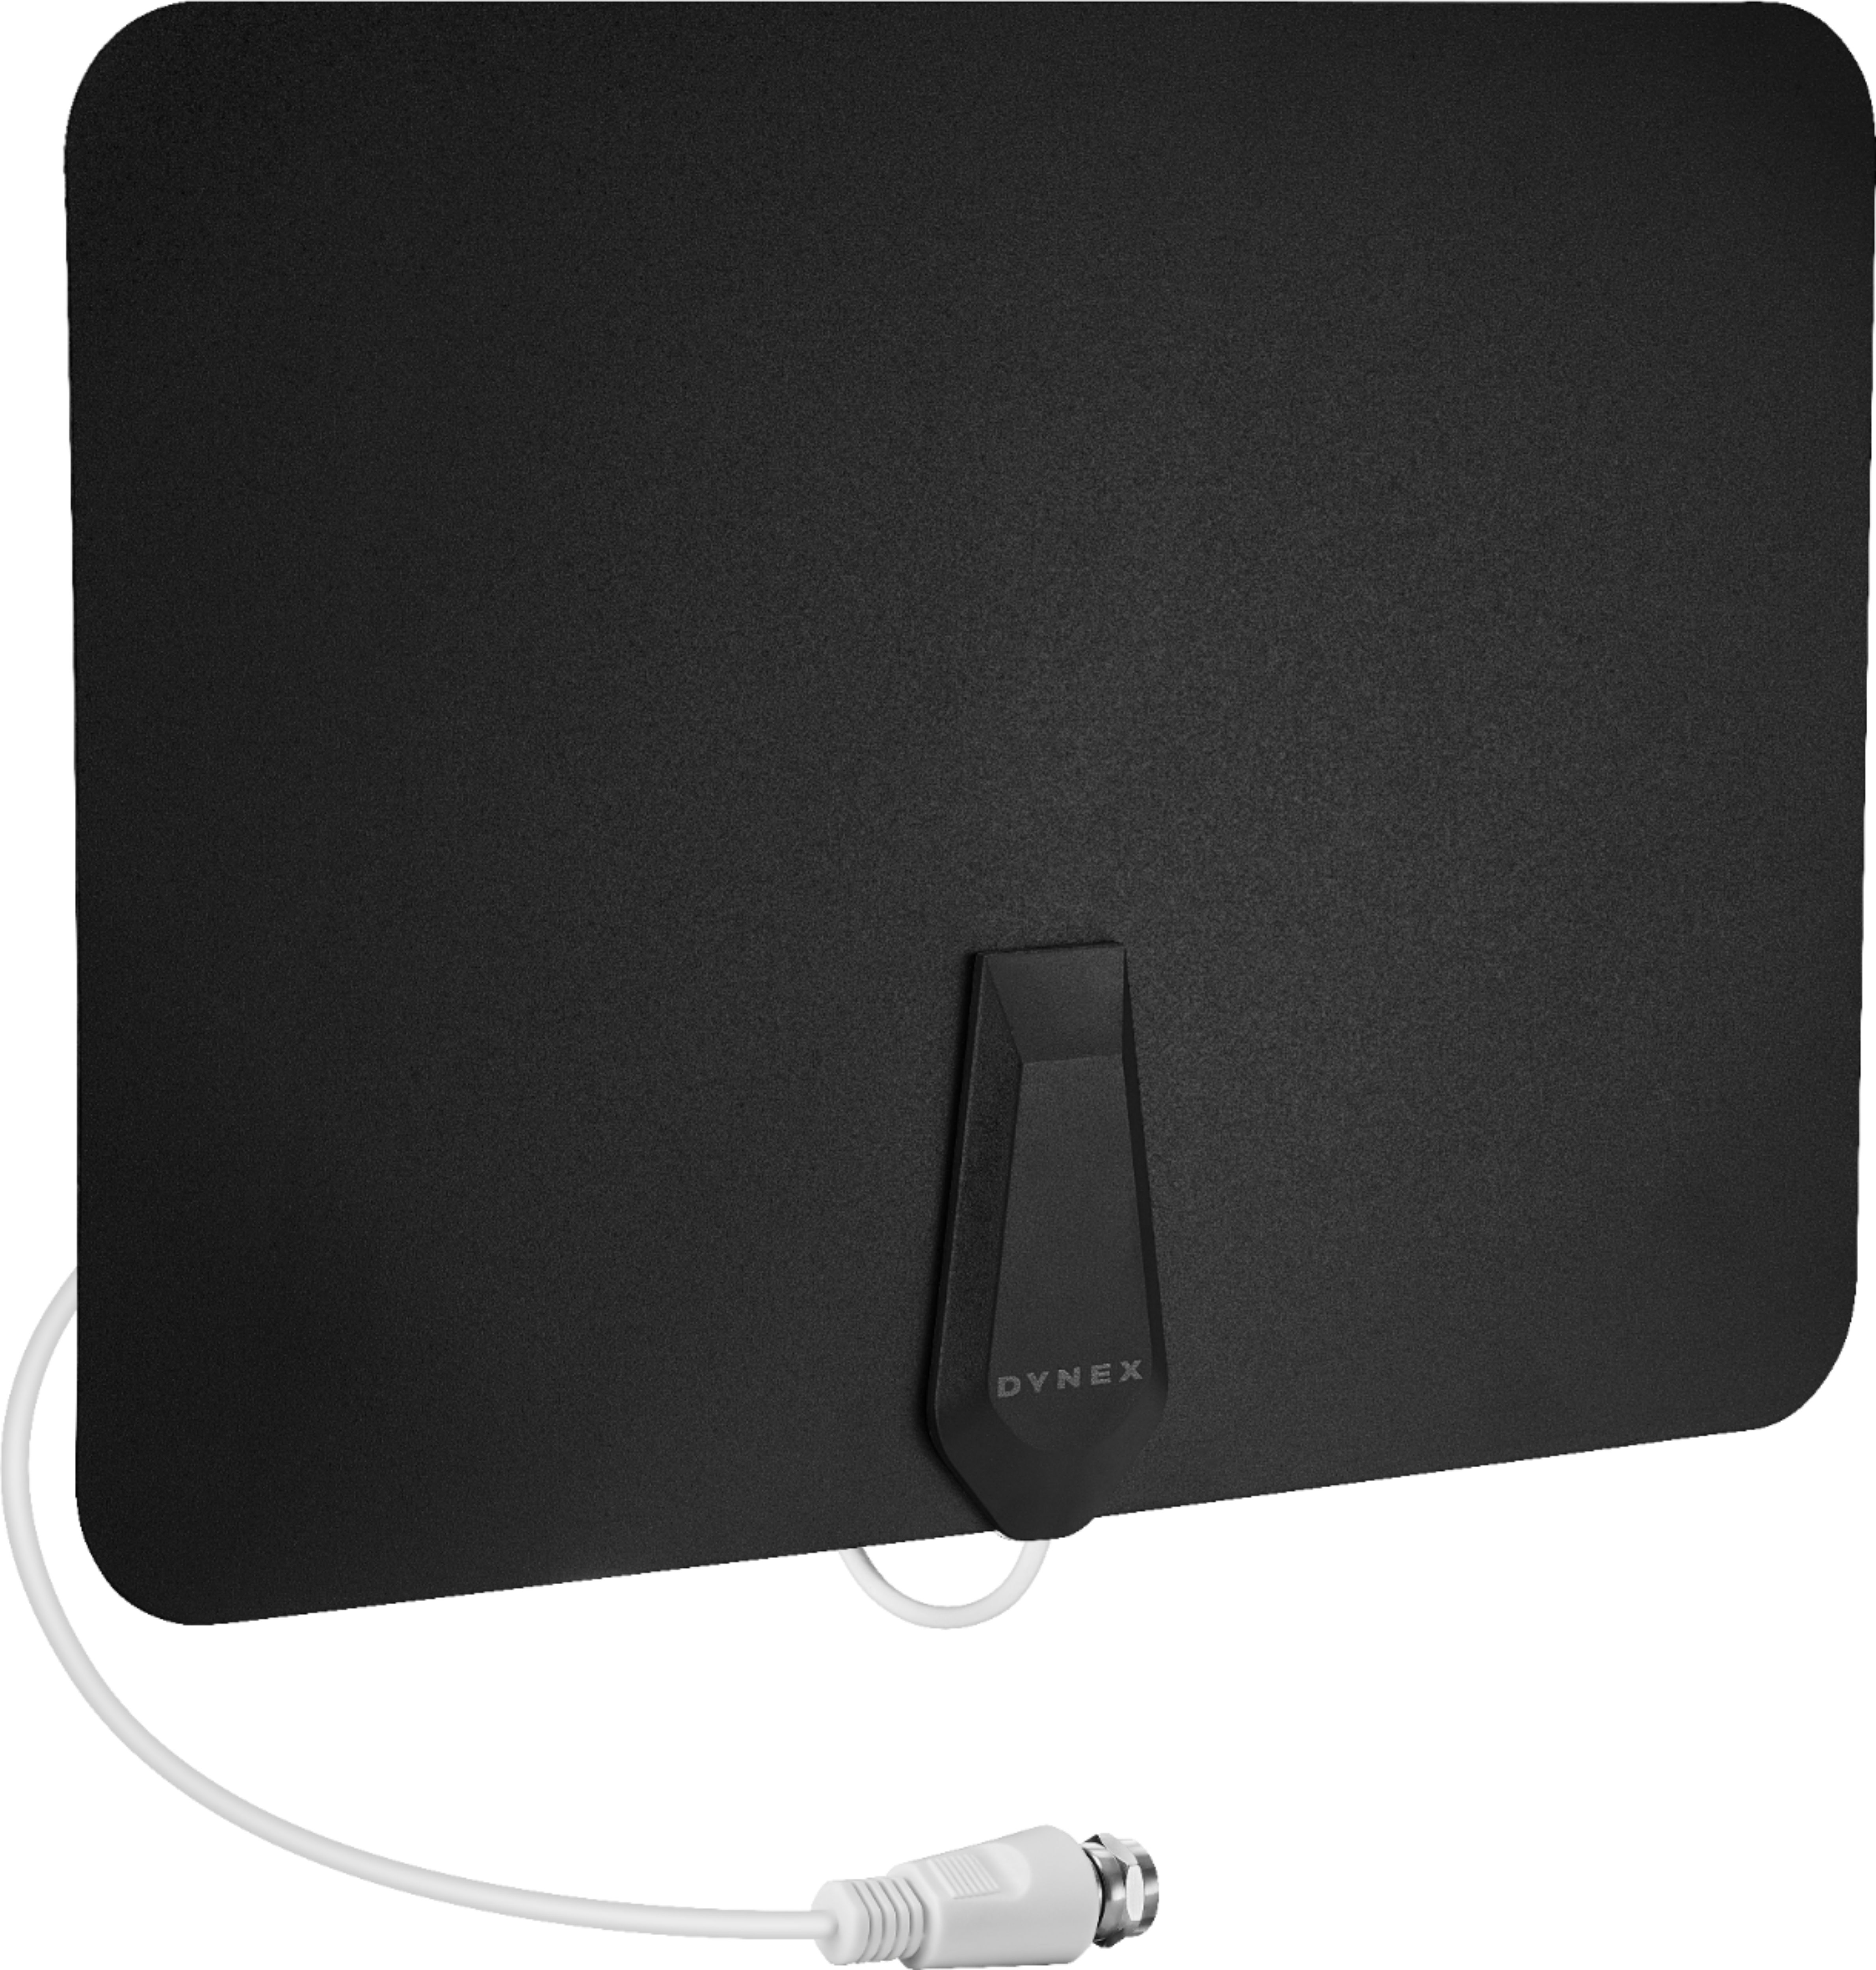 Angle View: Dynex™ - Long-Range Paper Thin HDTV Antenna - Black/White